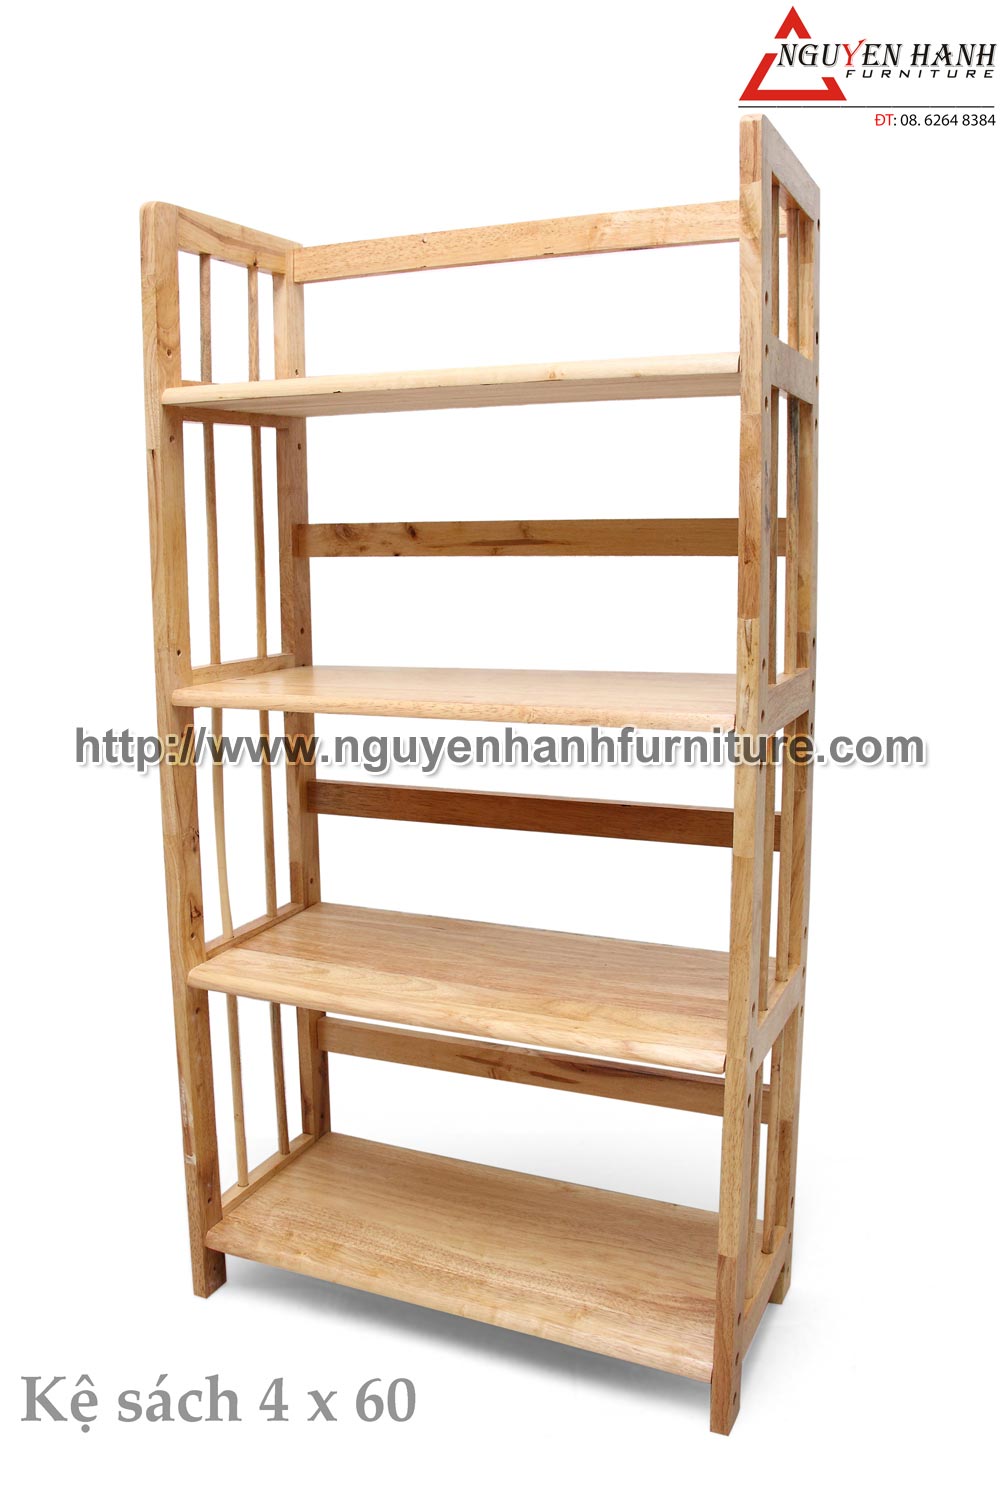 Name product: 4 storey Adjustable Bookshelf 60 